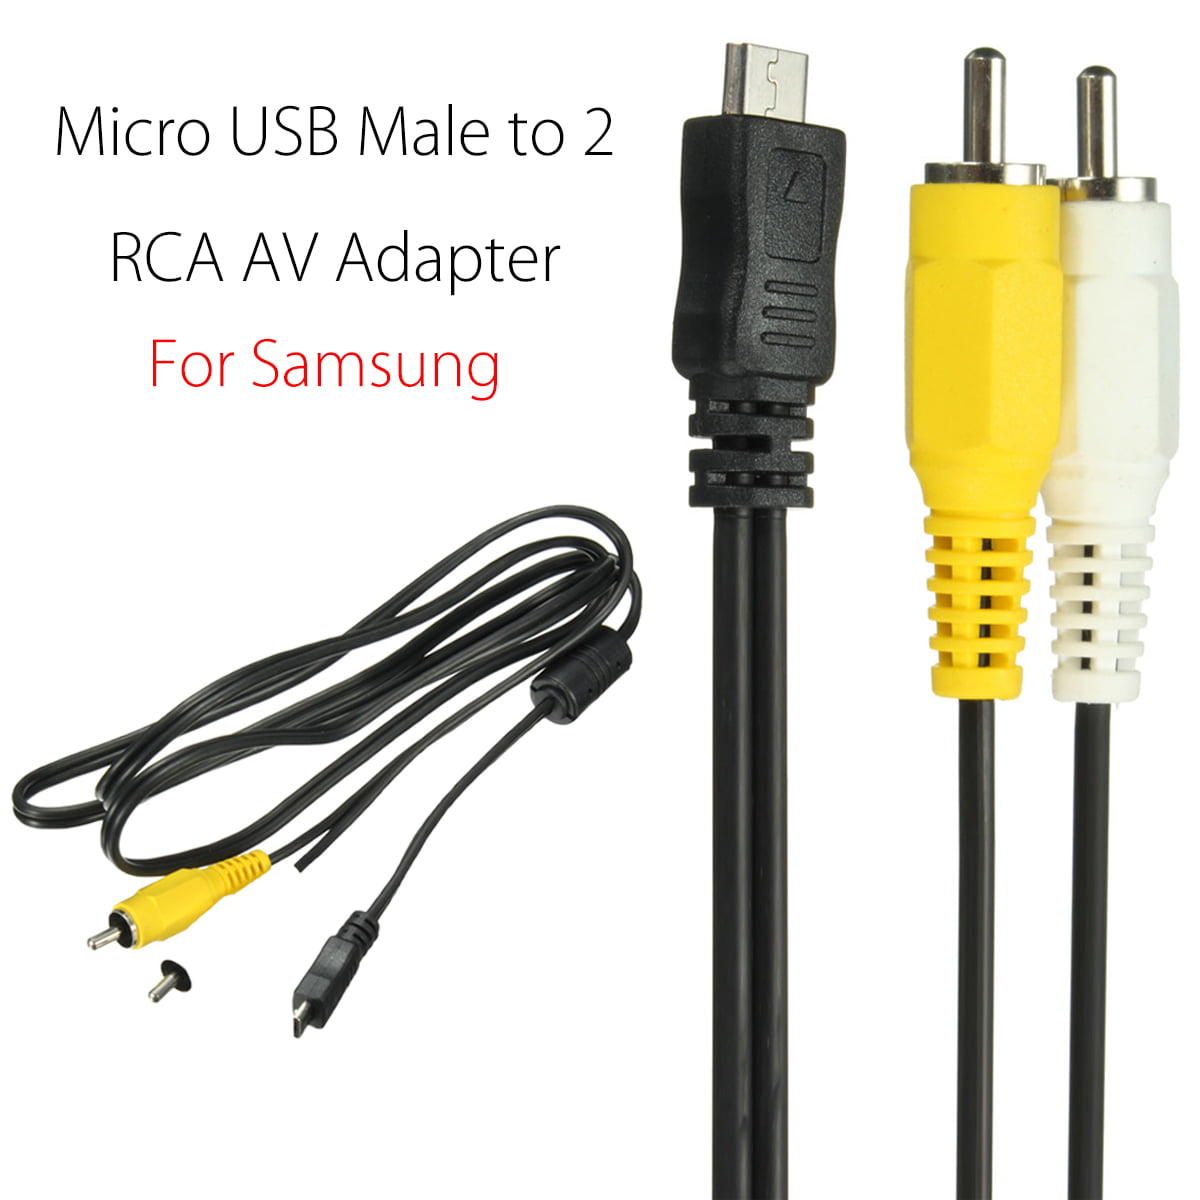 Micro Usb Male To 2 Rca Av Adapter Audio Video Cable For Samsung Mobile Phone Walmart Com Walmart Com